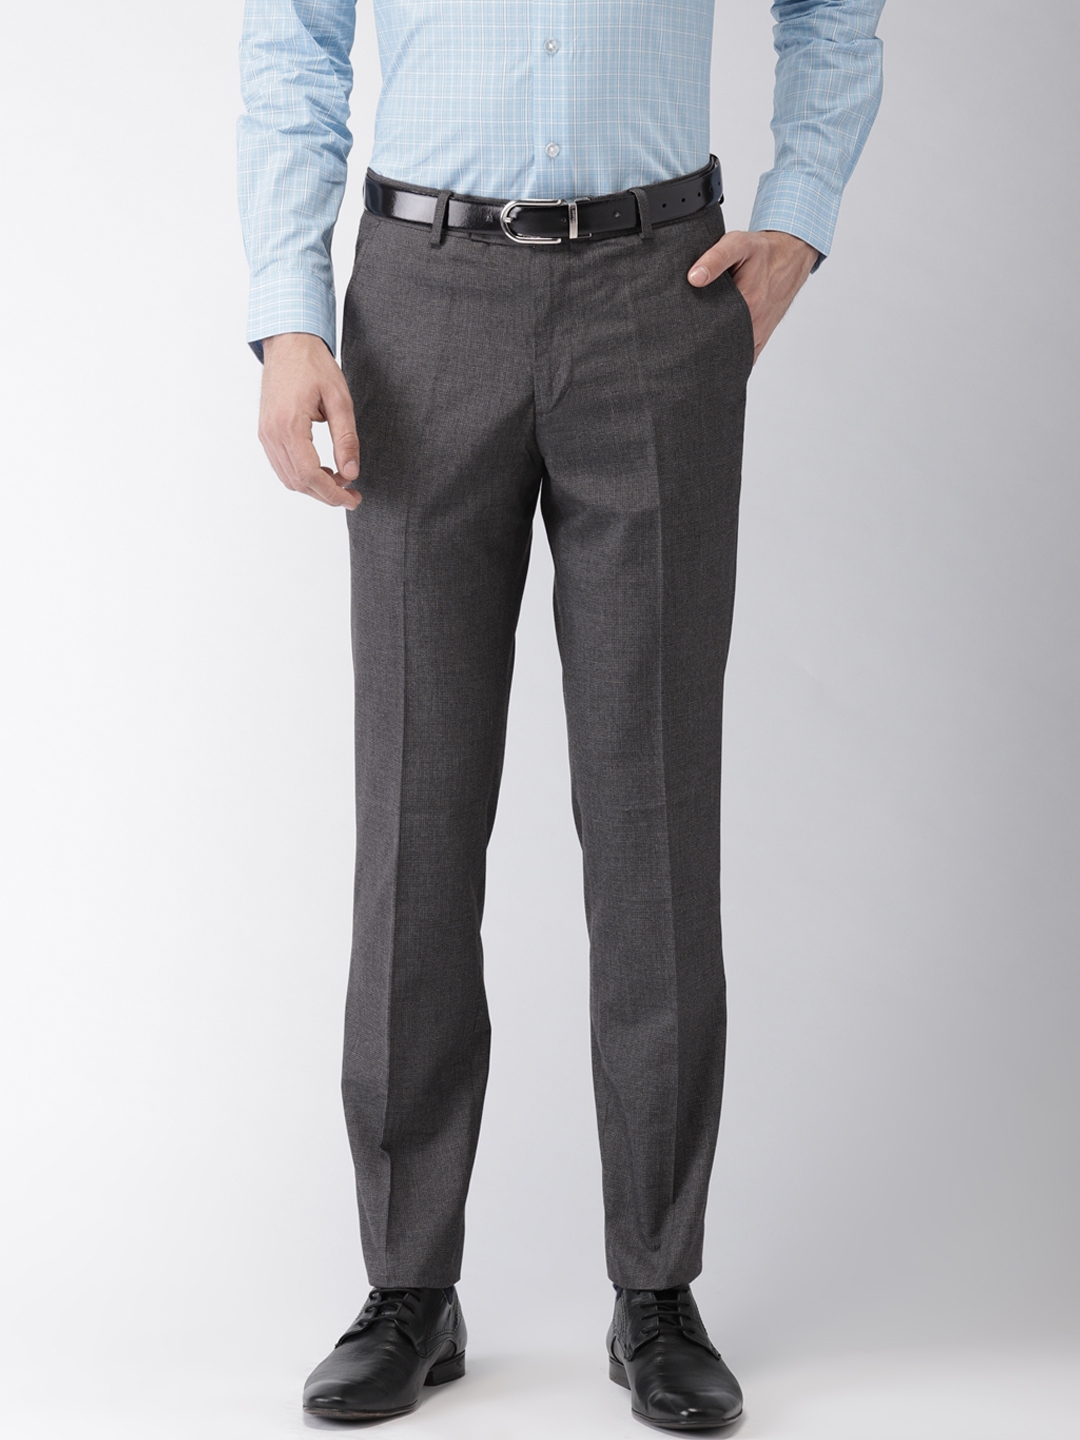 Buy Black Coffee Grey Formal Trousers - Trousers for Men 1778107 | Myntra